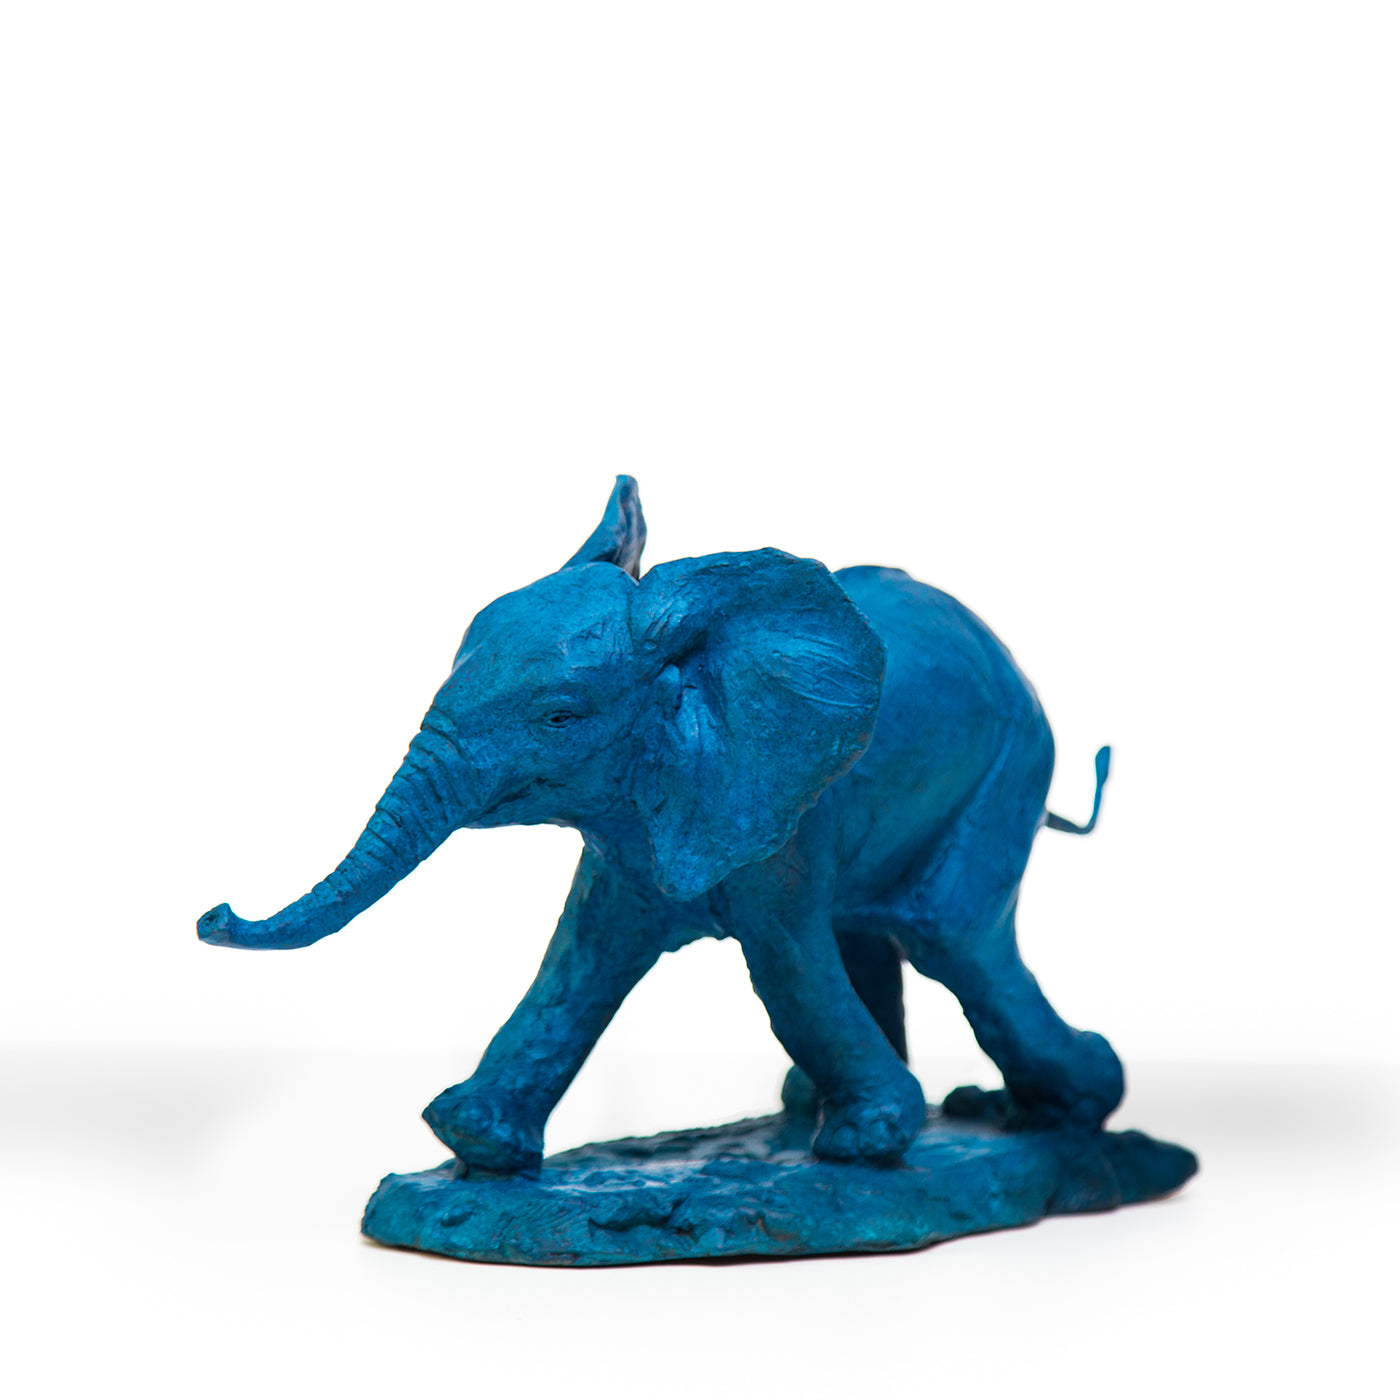 Blue Baby Elephant Sculpture - Alternative view 1